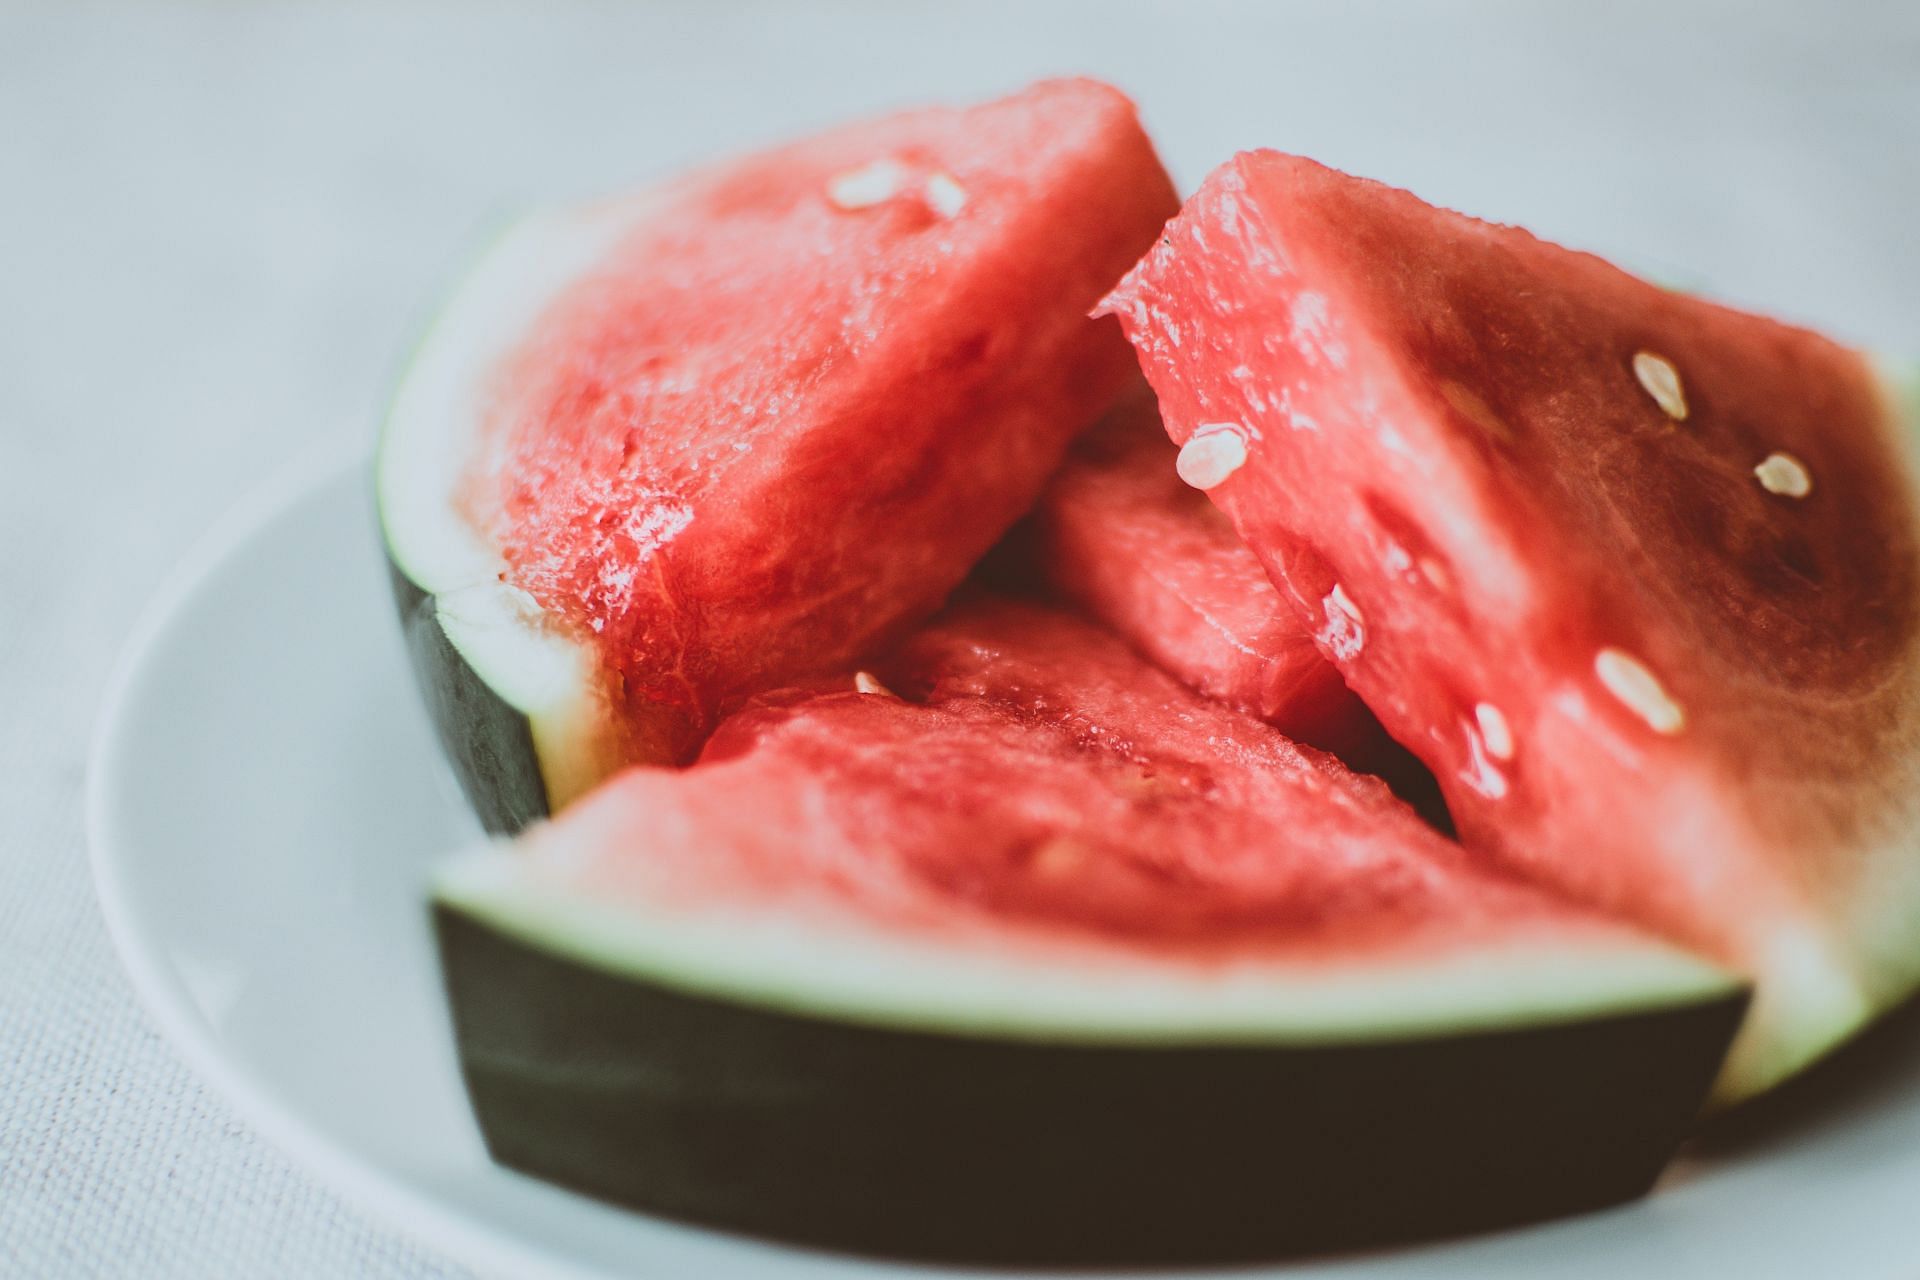 Benefits of having watermelon (image sourced via Pexels / Photo by Lisa fotios)